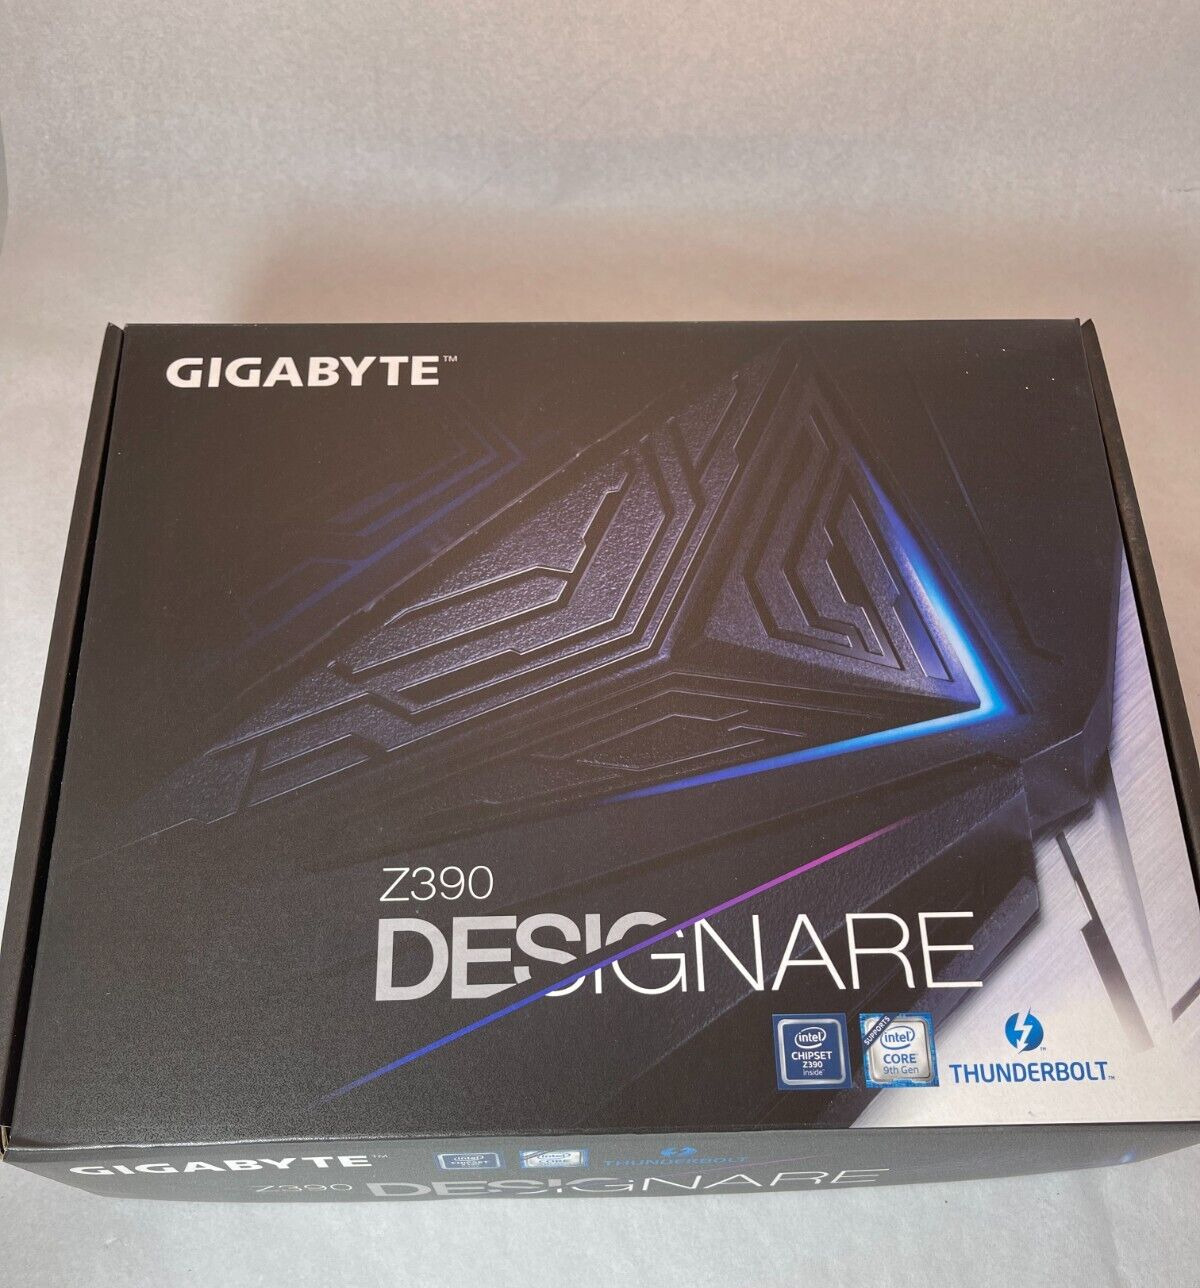 Gigabyte Z390 Designare Intel LGA 1151 DDR4 Motherboard - Used